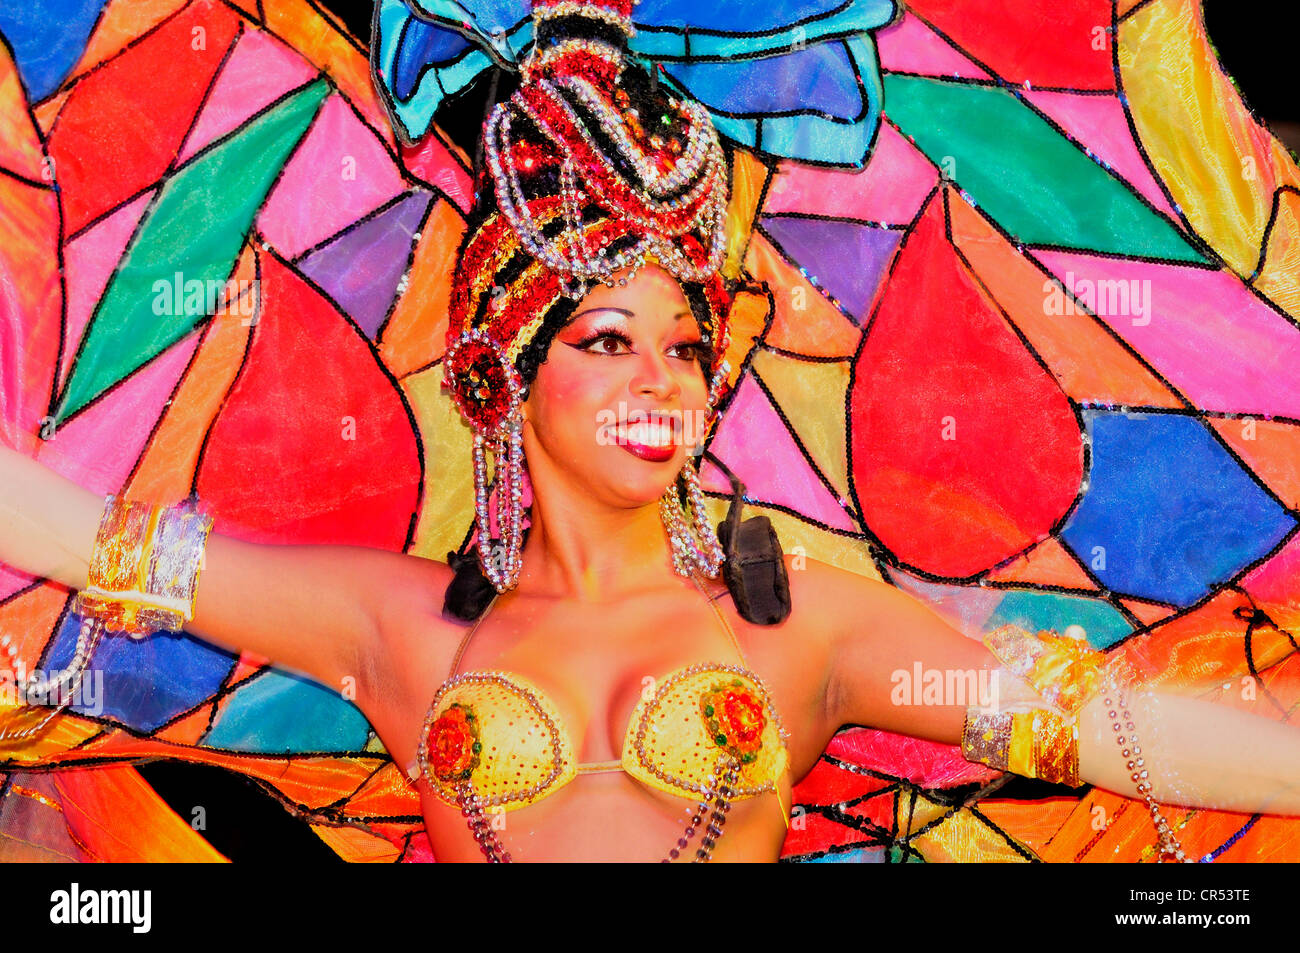 Dancer at the Tropicana Club, cabaret, Havana, Cuba, Caribbean Stock Photo